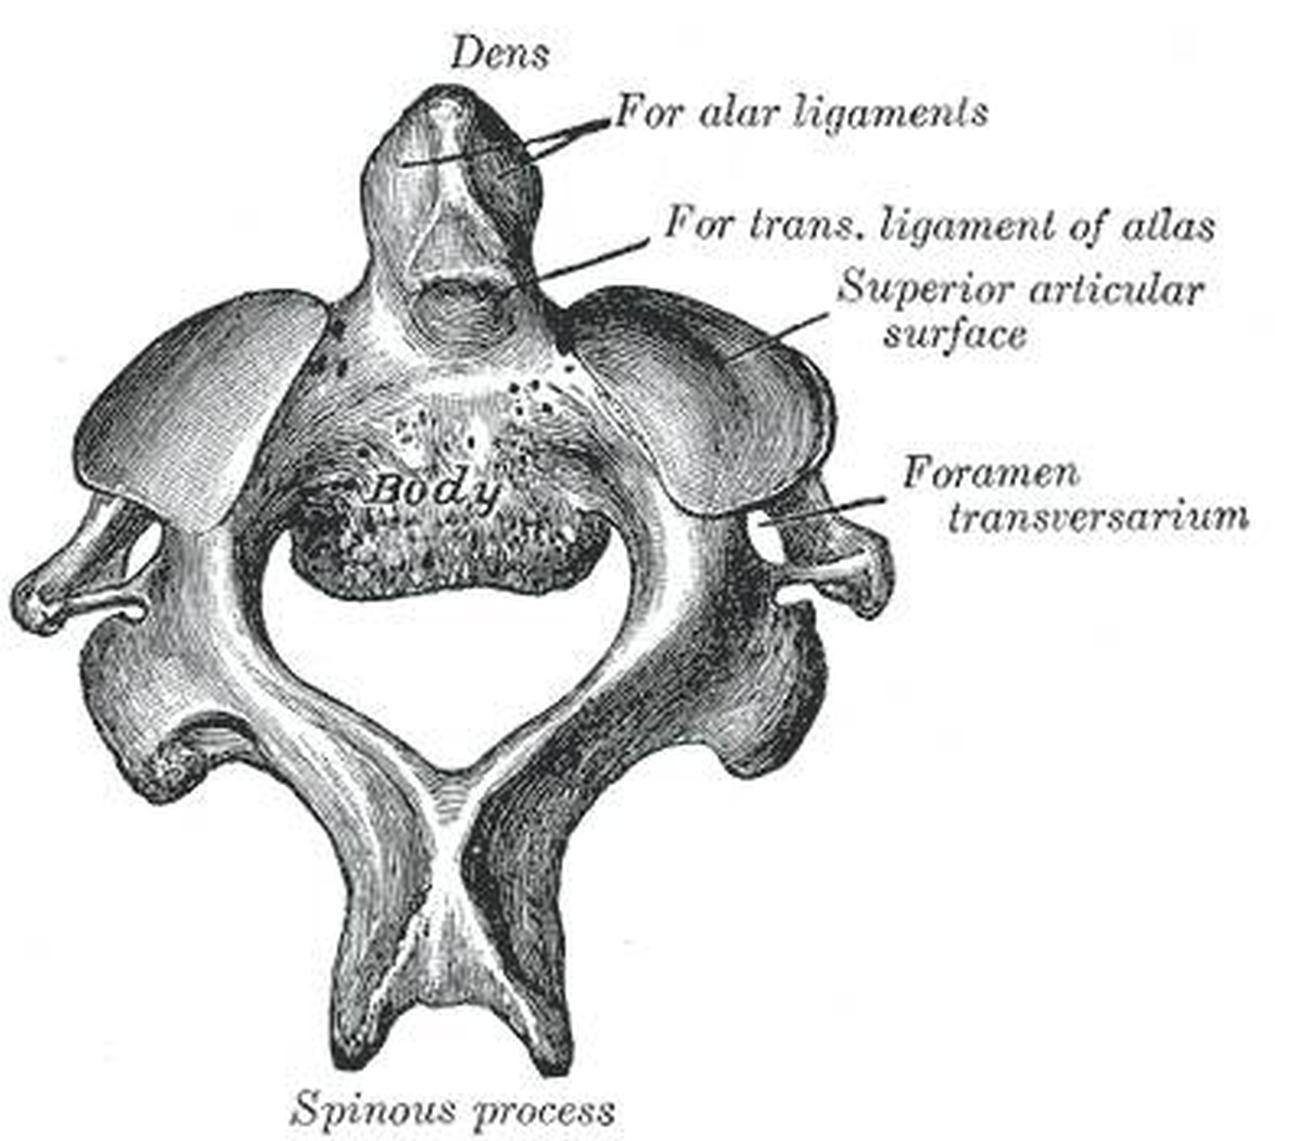 Pictures Of Axis Vertebra, Odontoid Process